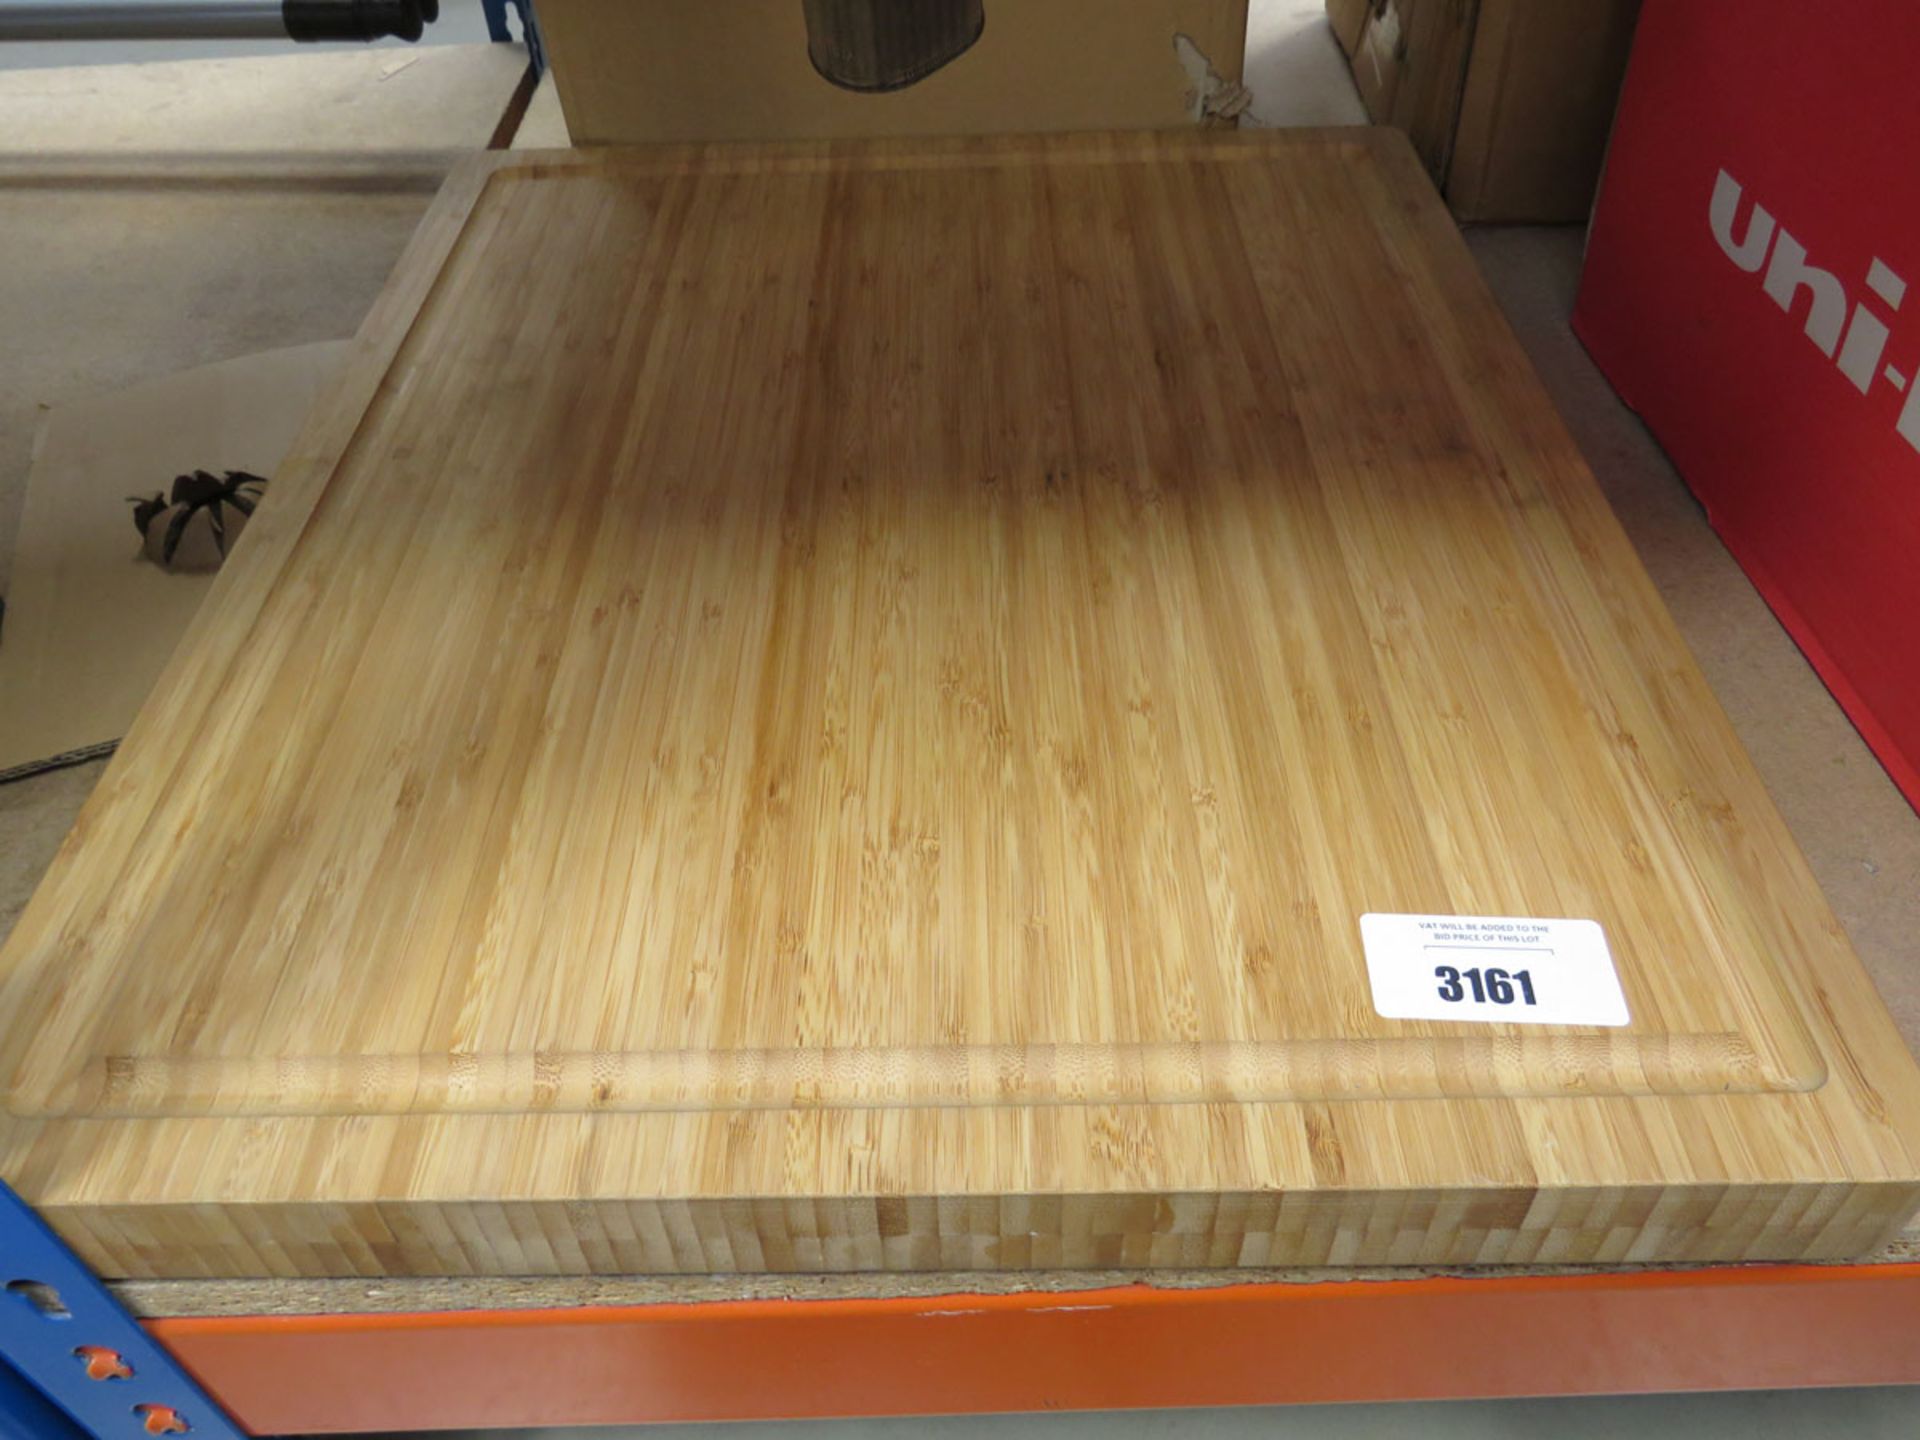 Large wooden serving board